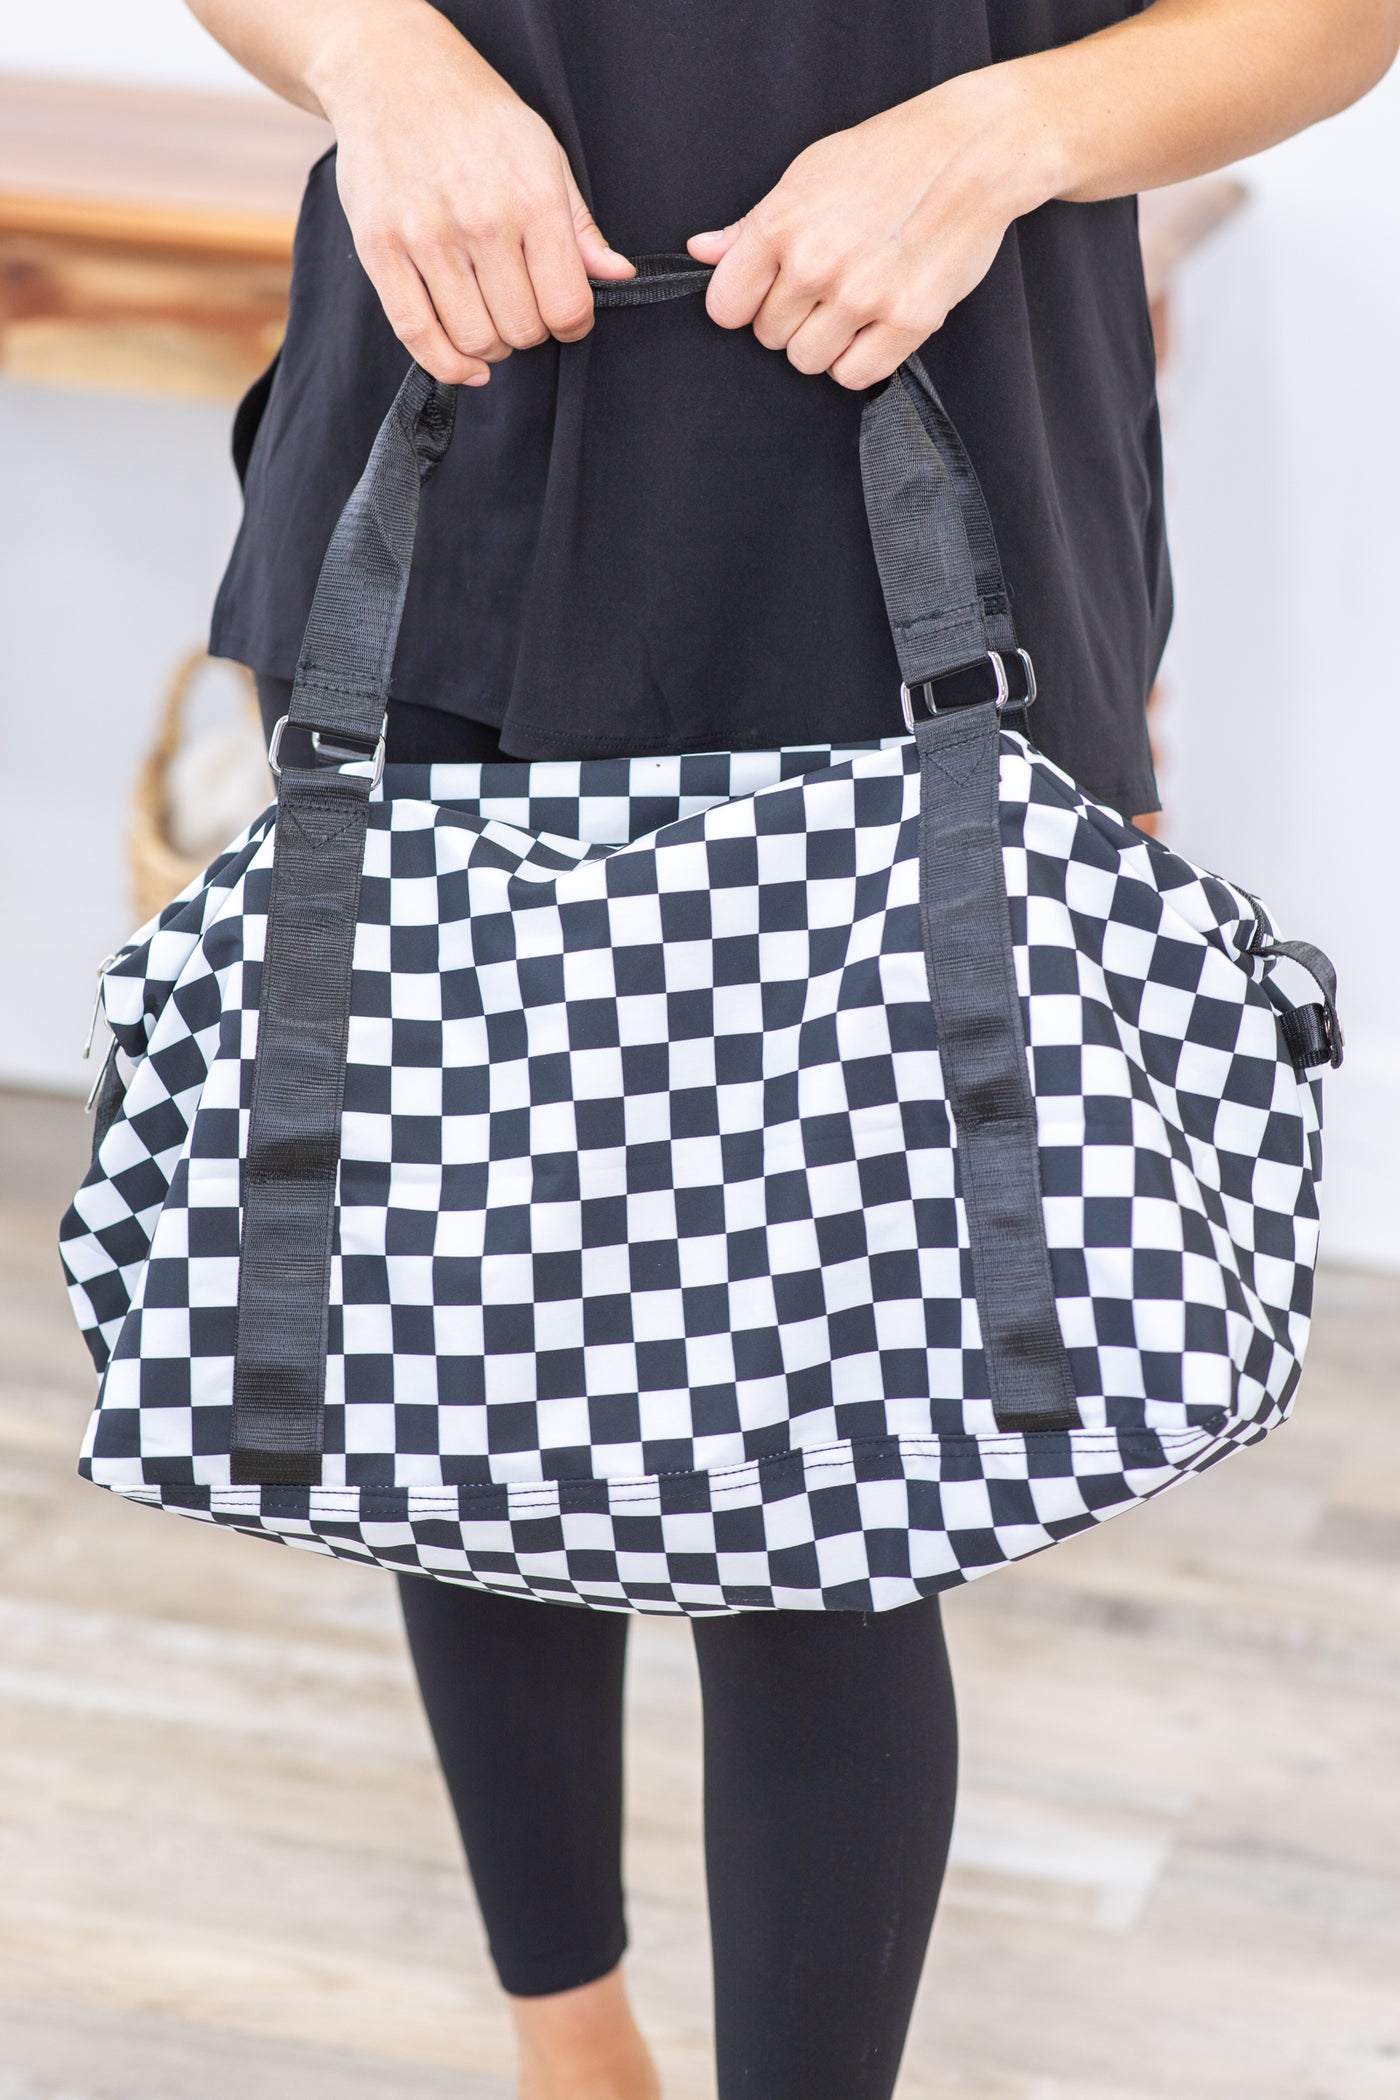 Black and White Checkered Travel Duffle Bag